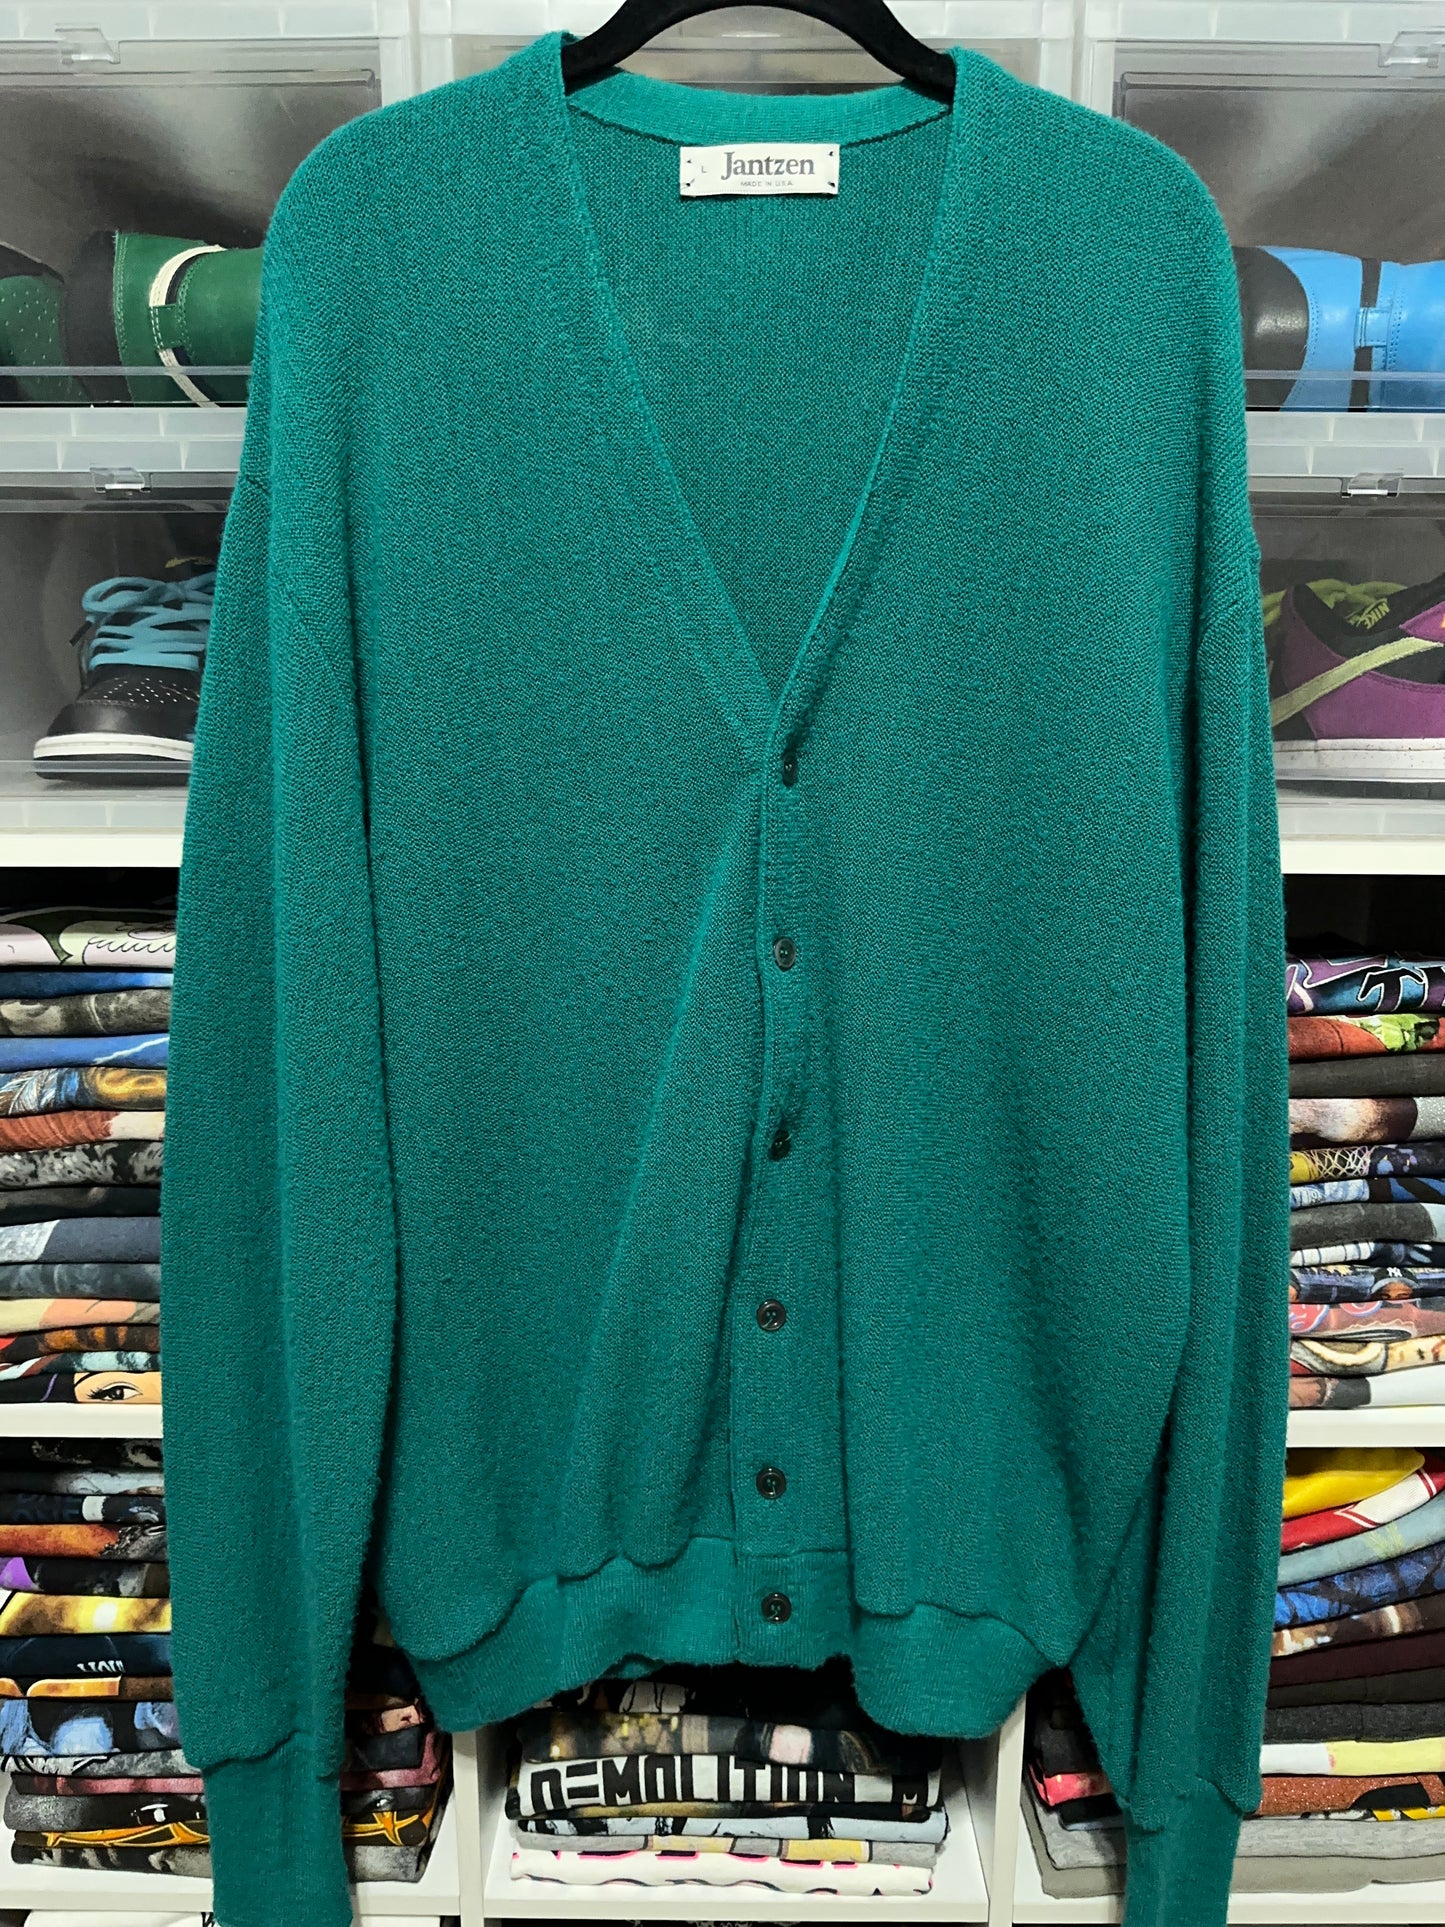 Vintage Jantzen Knit Cardigan Sweater Made In USA Large Green